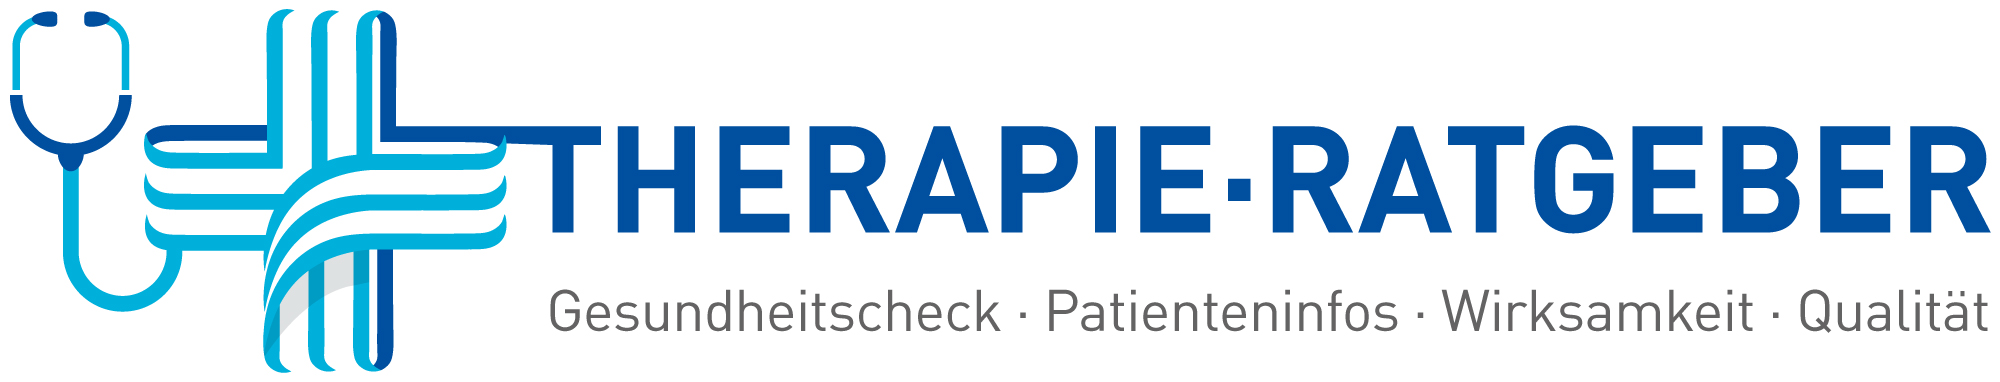 Logo Online Therapie-Ratgeber